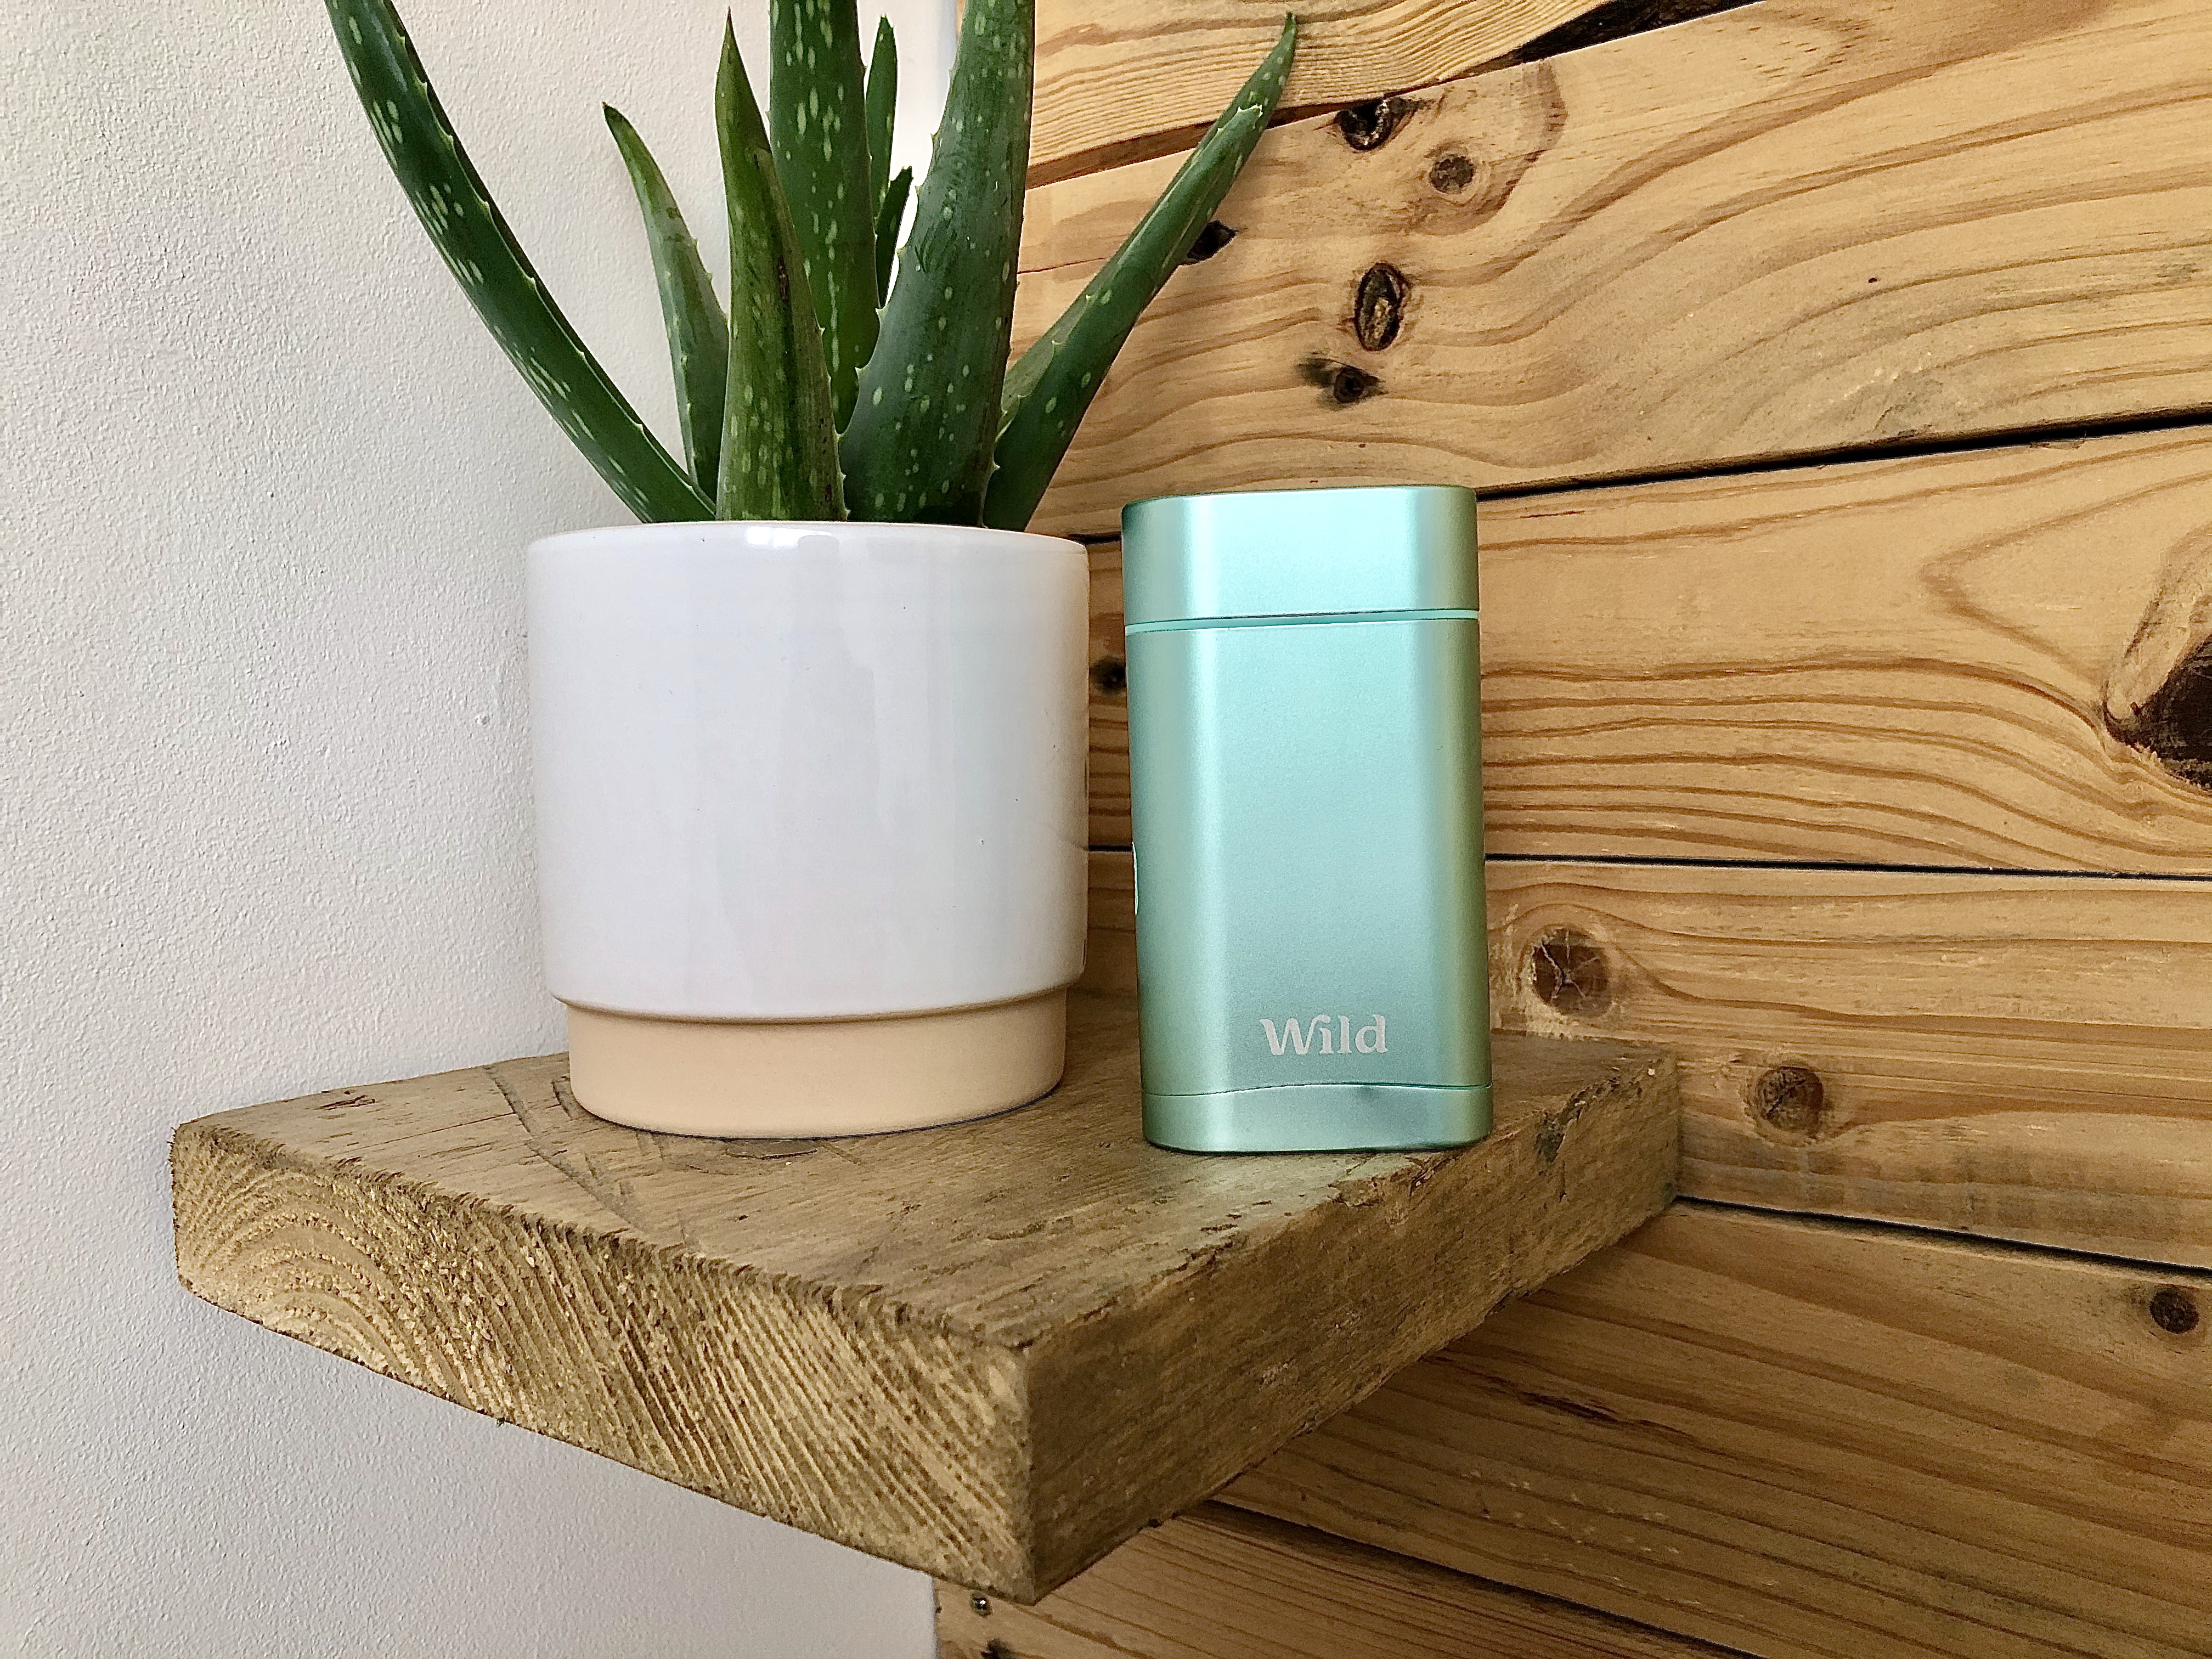 Wild zero waste natural deodorant review + £5 off discount code